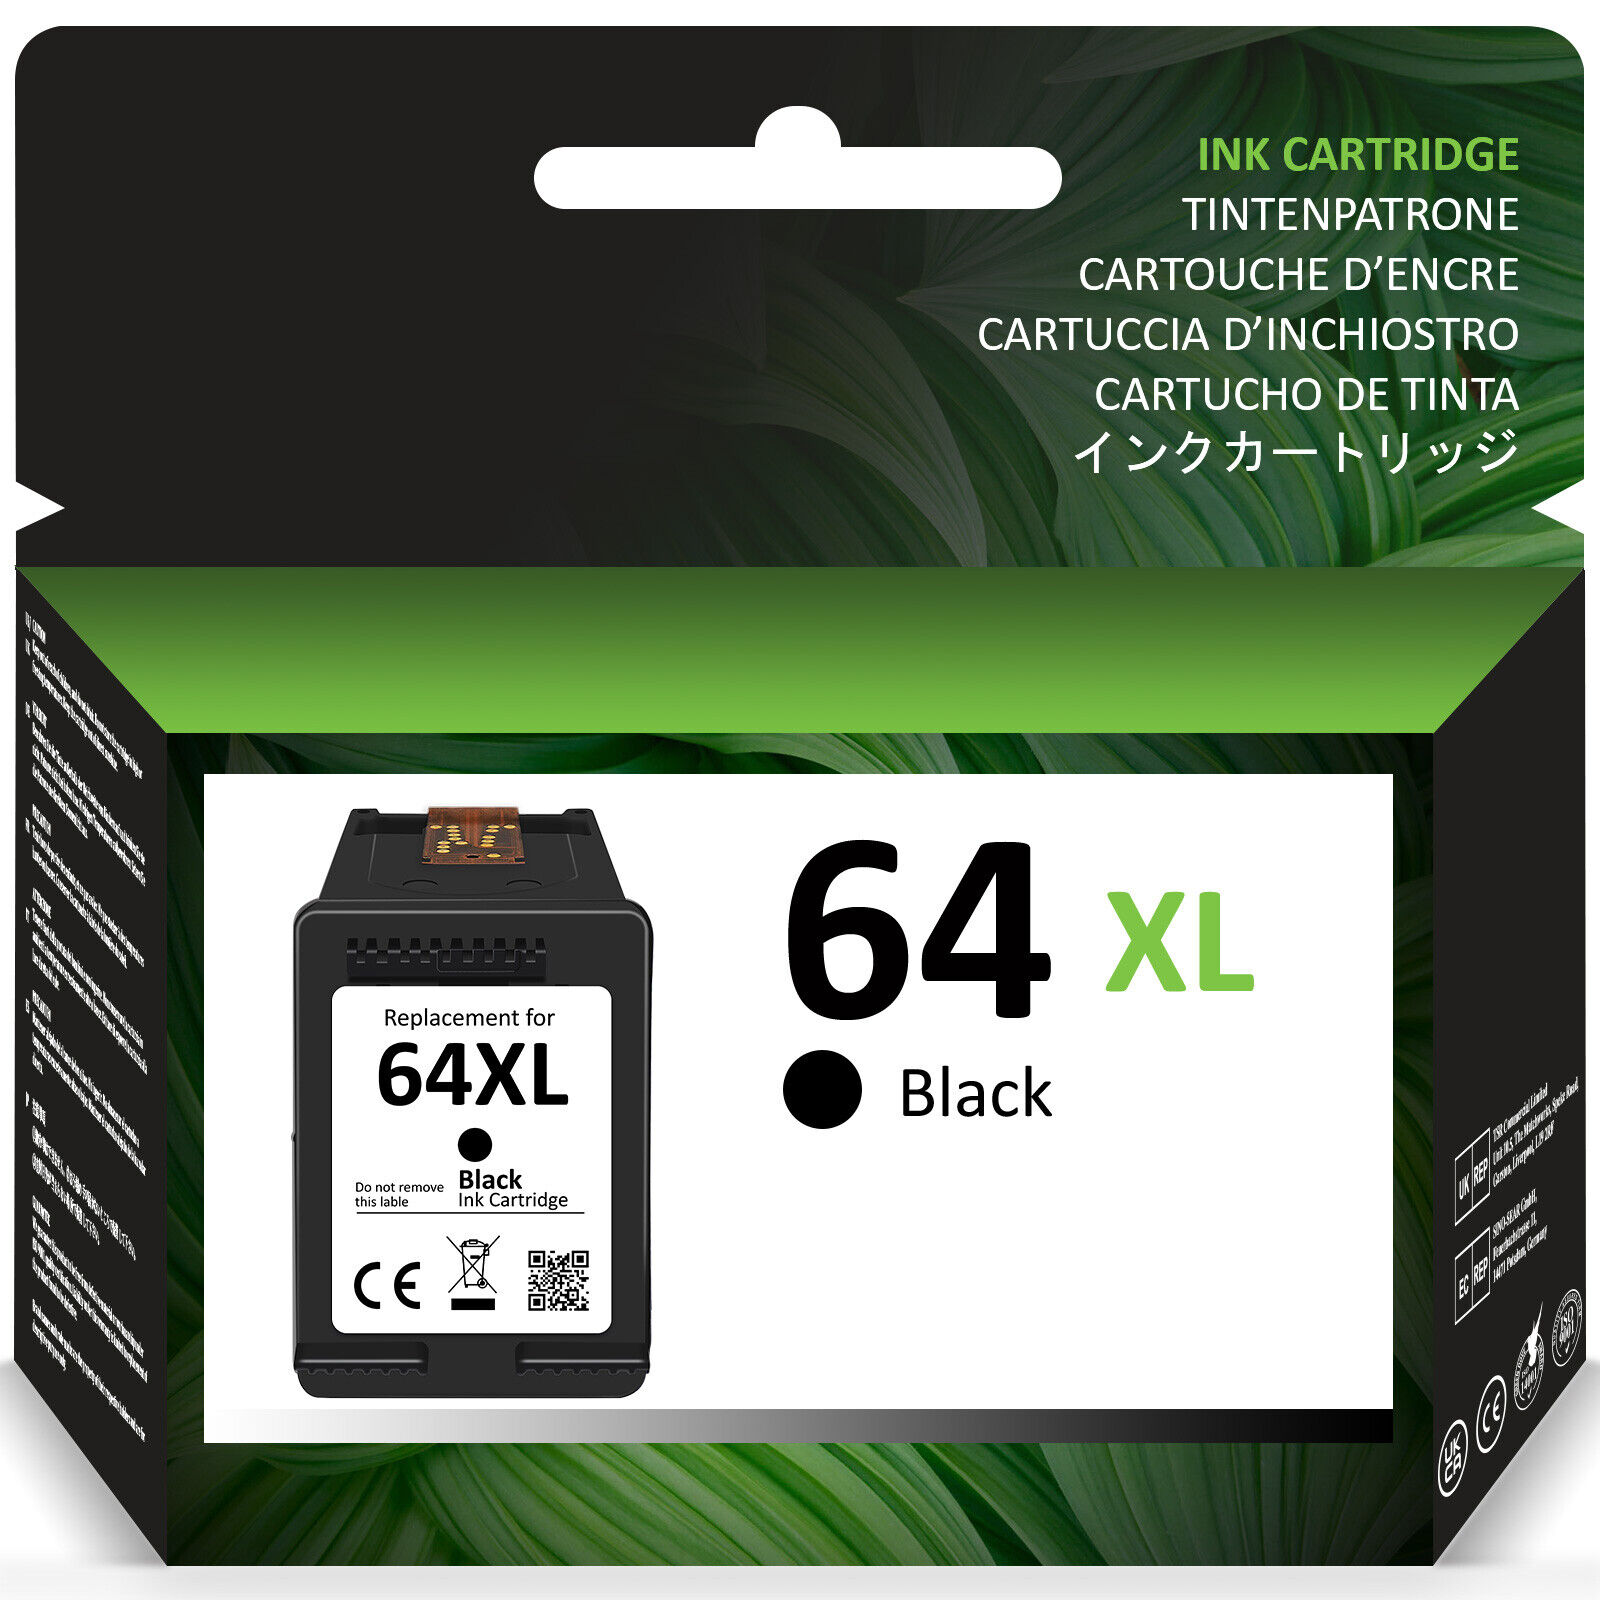 64-XL Black Color Ink Cartridge 64XL for HP Envy Photo 7155 7855 7858 6255e 6252